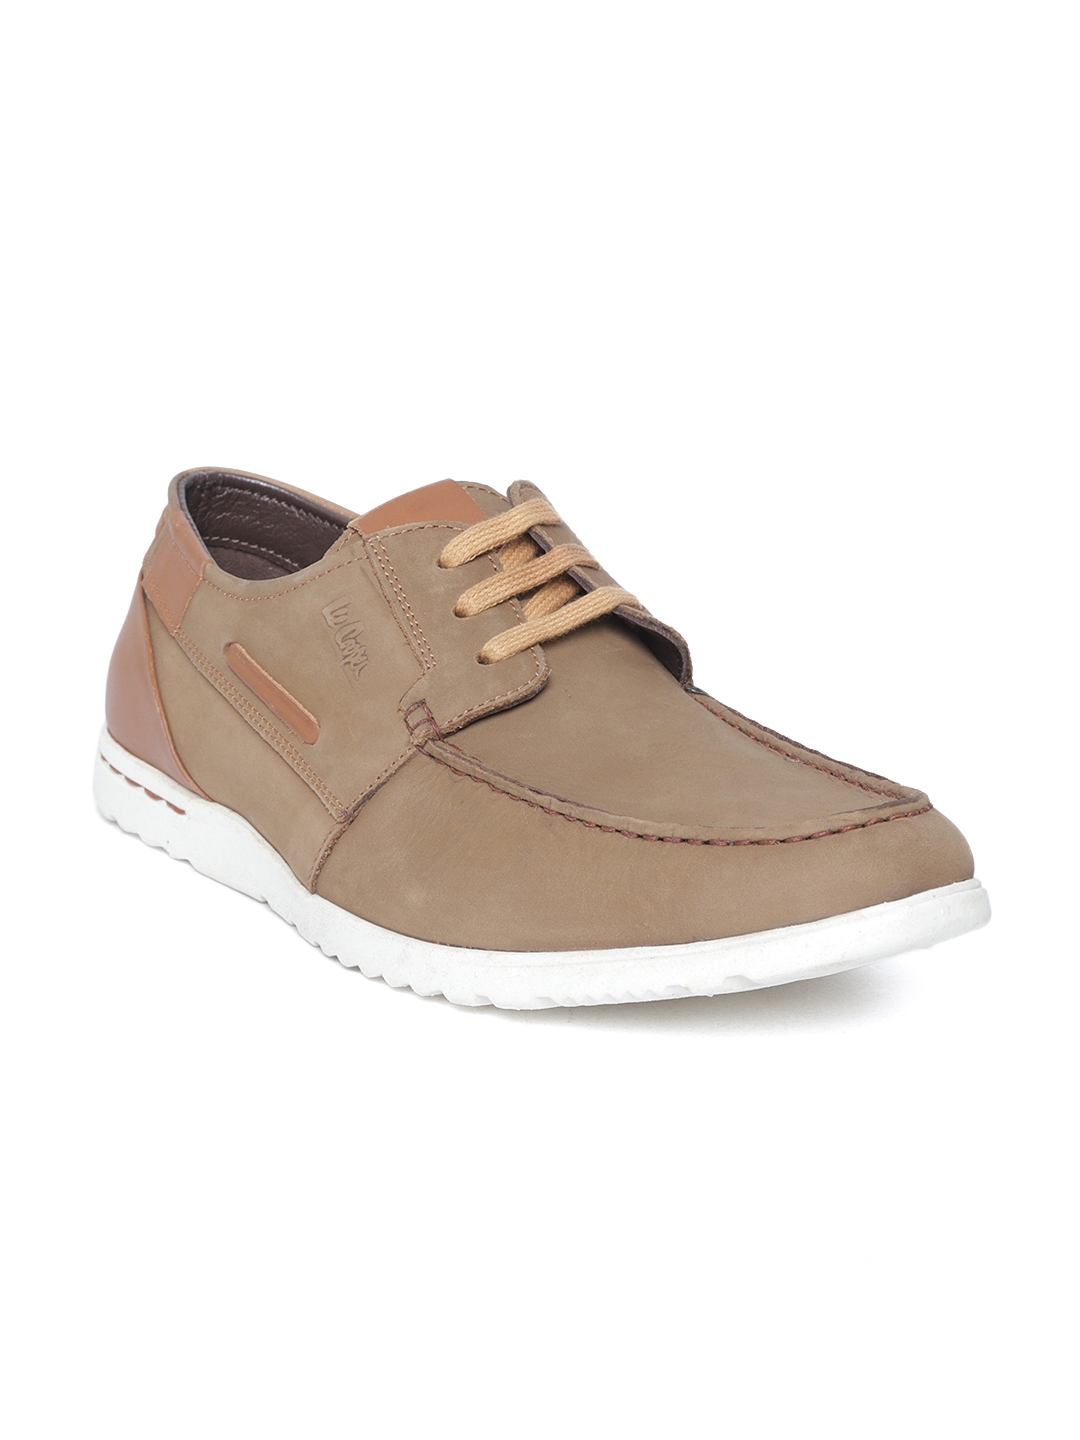 Buy Lee Cooper Men Khaki Leather Derbys - Casual Shoes for Men 8454137 ...